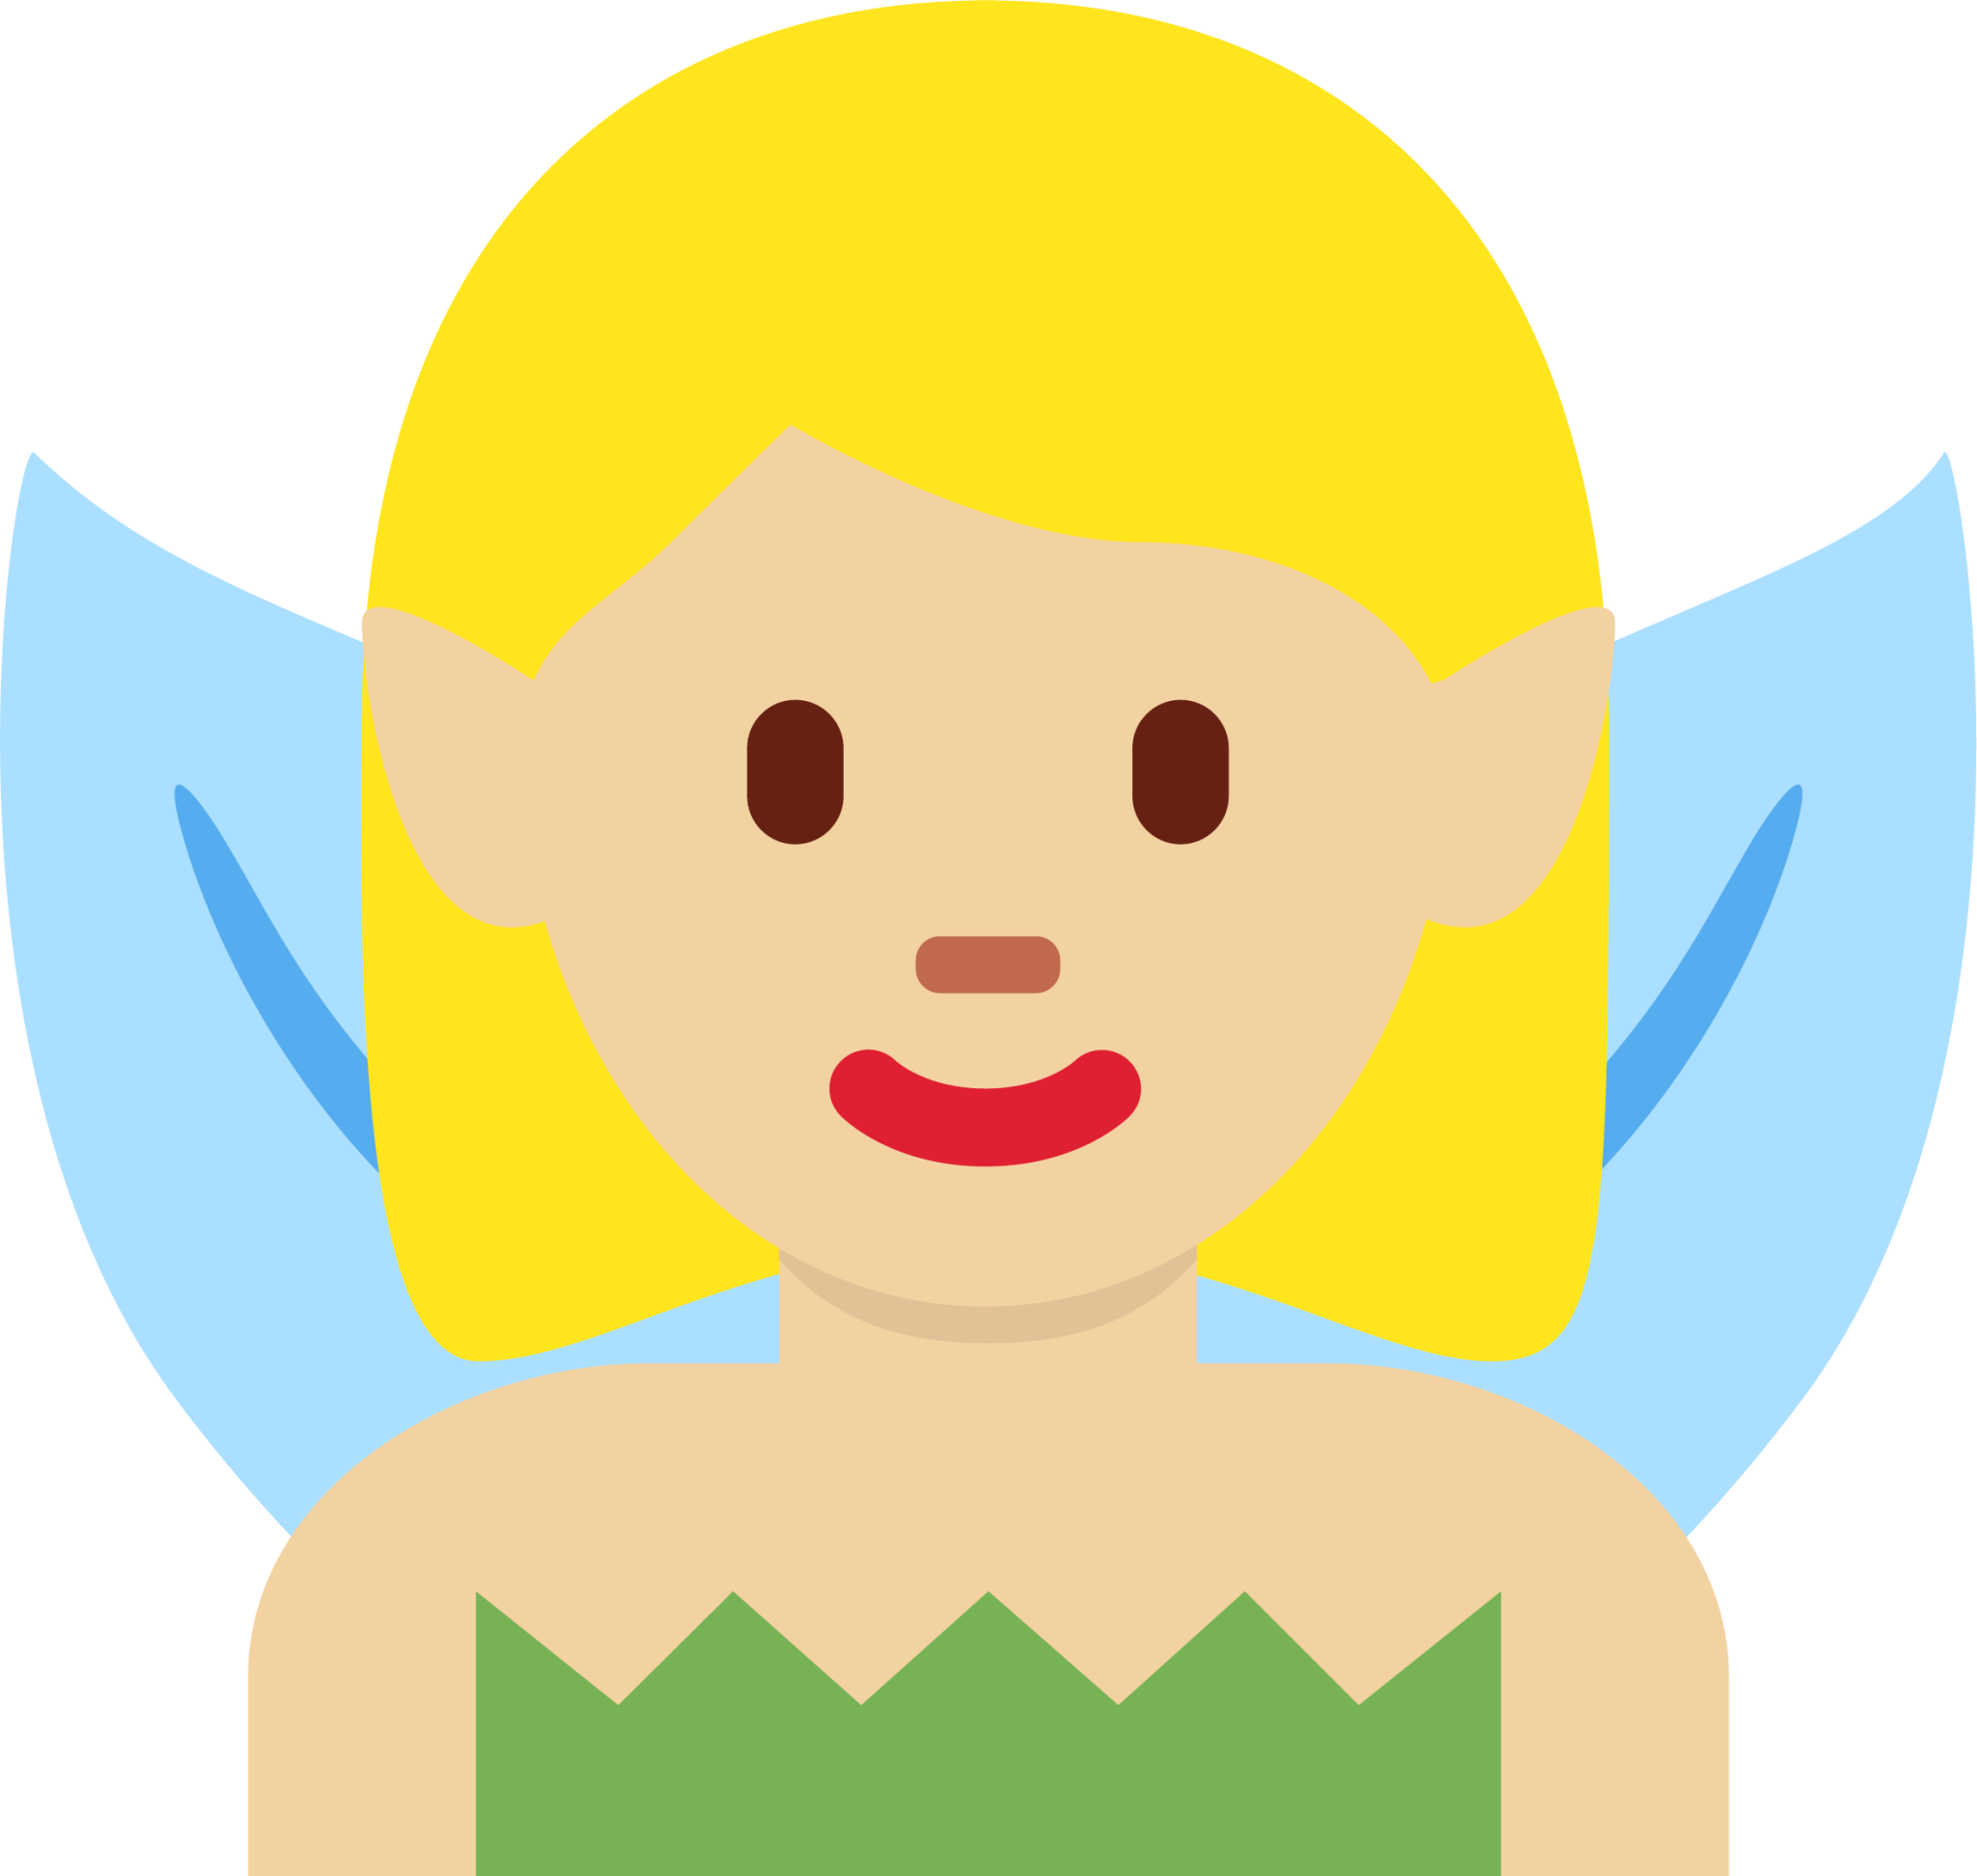 woman fairy: medium-light skin tone emoji